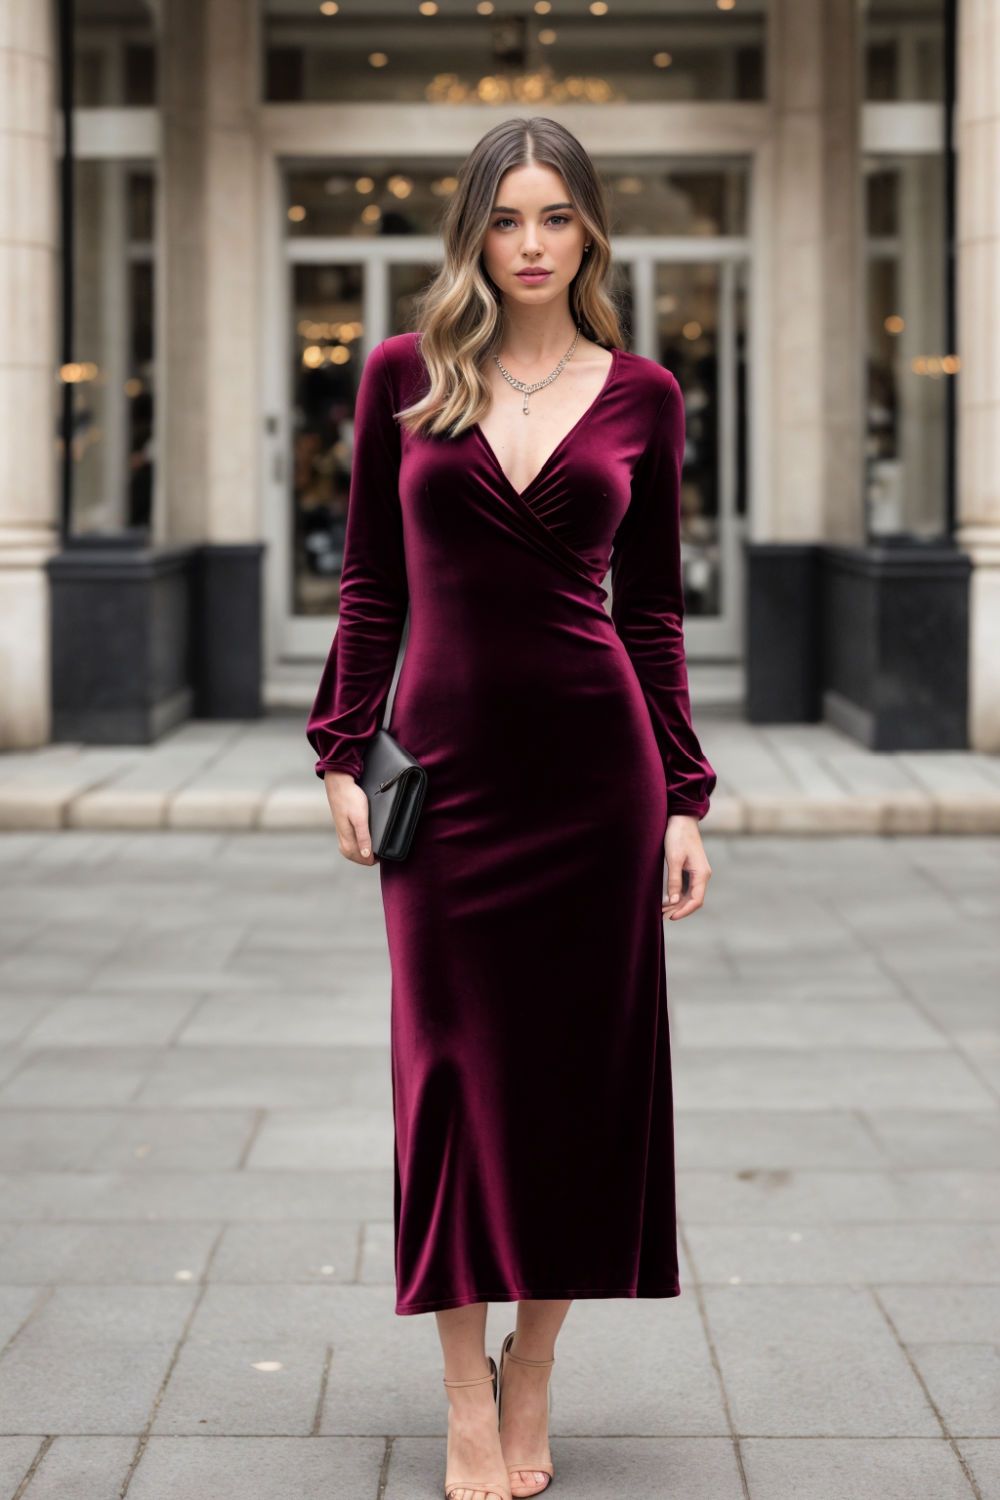 stylish velvet dress